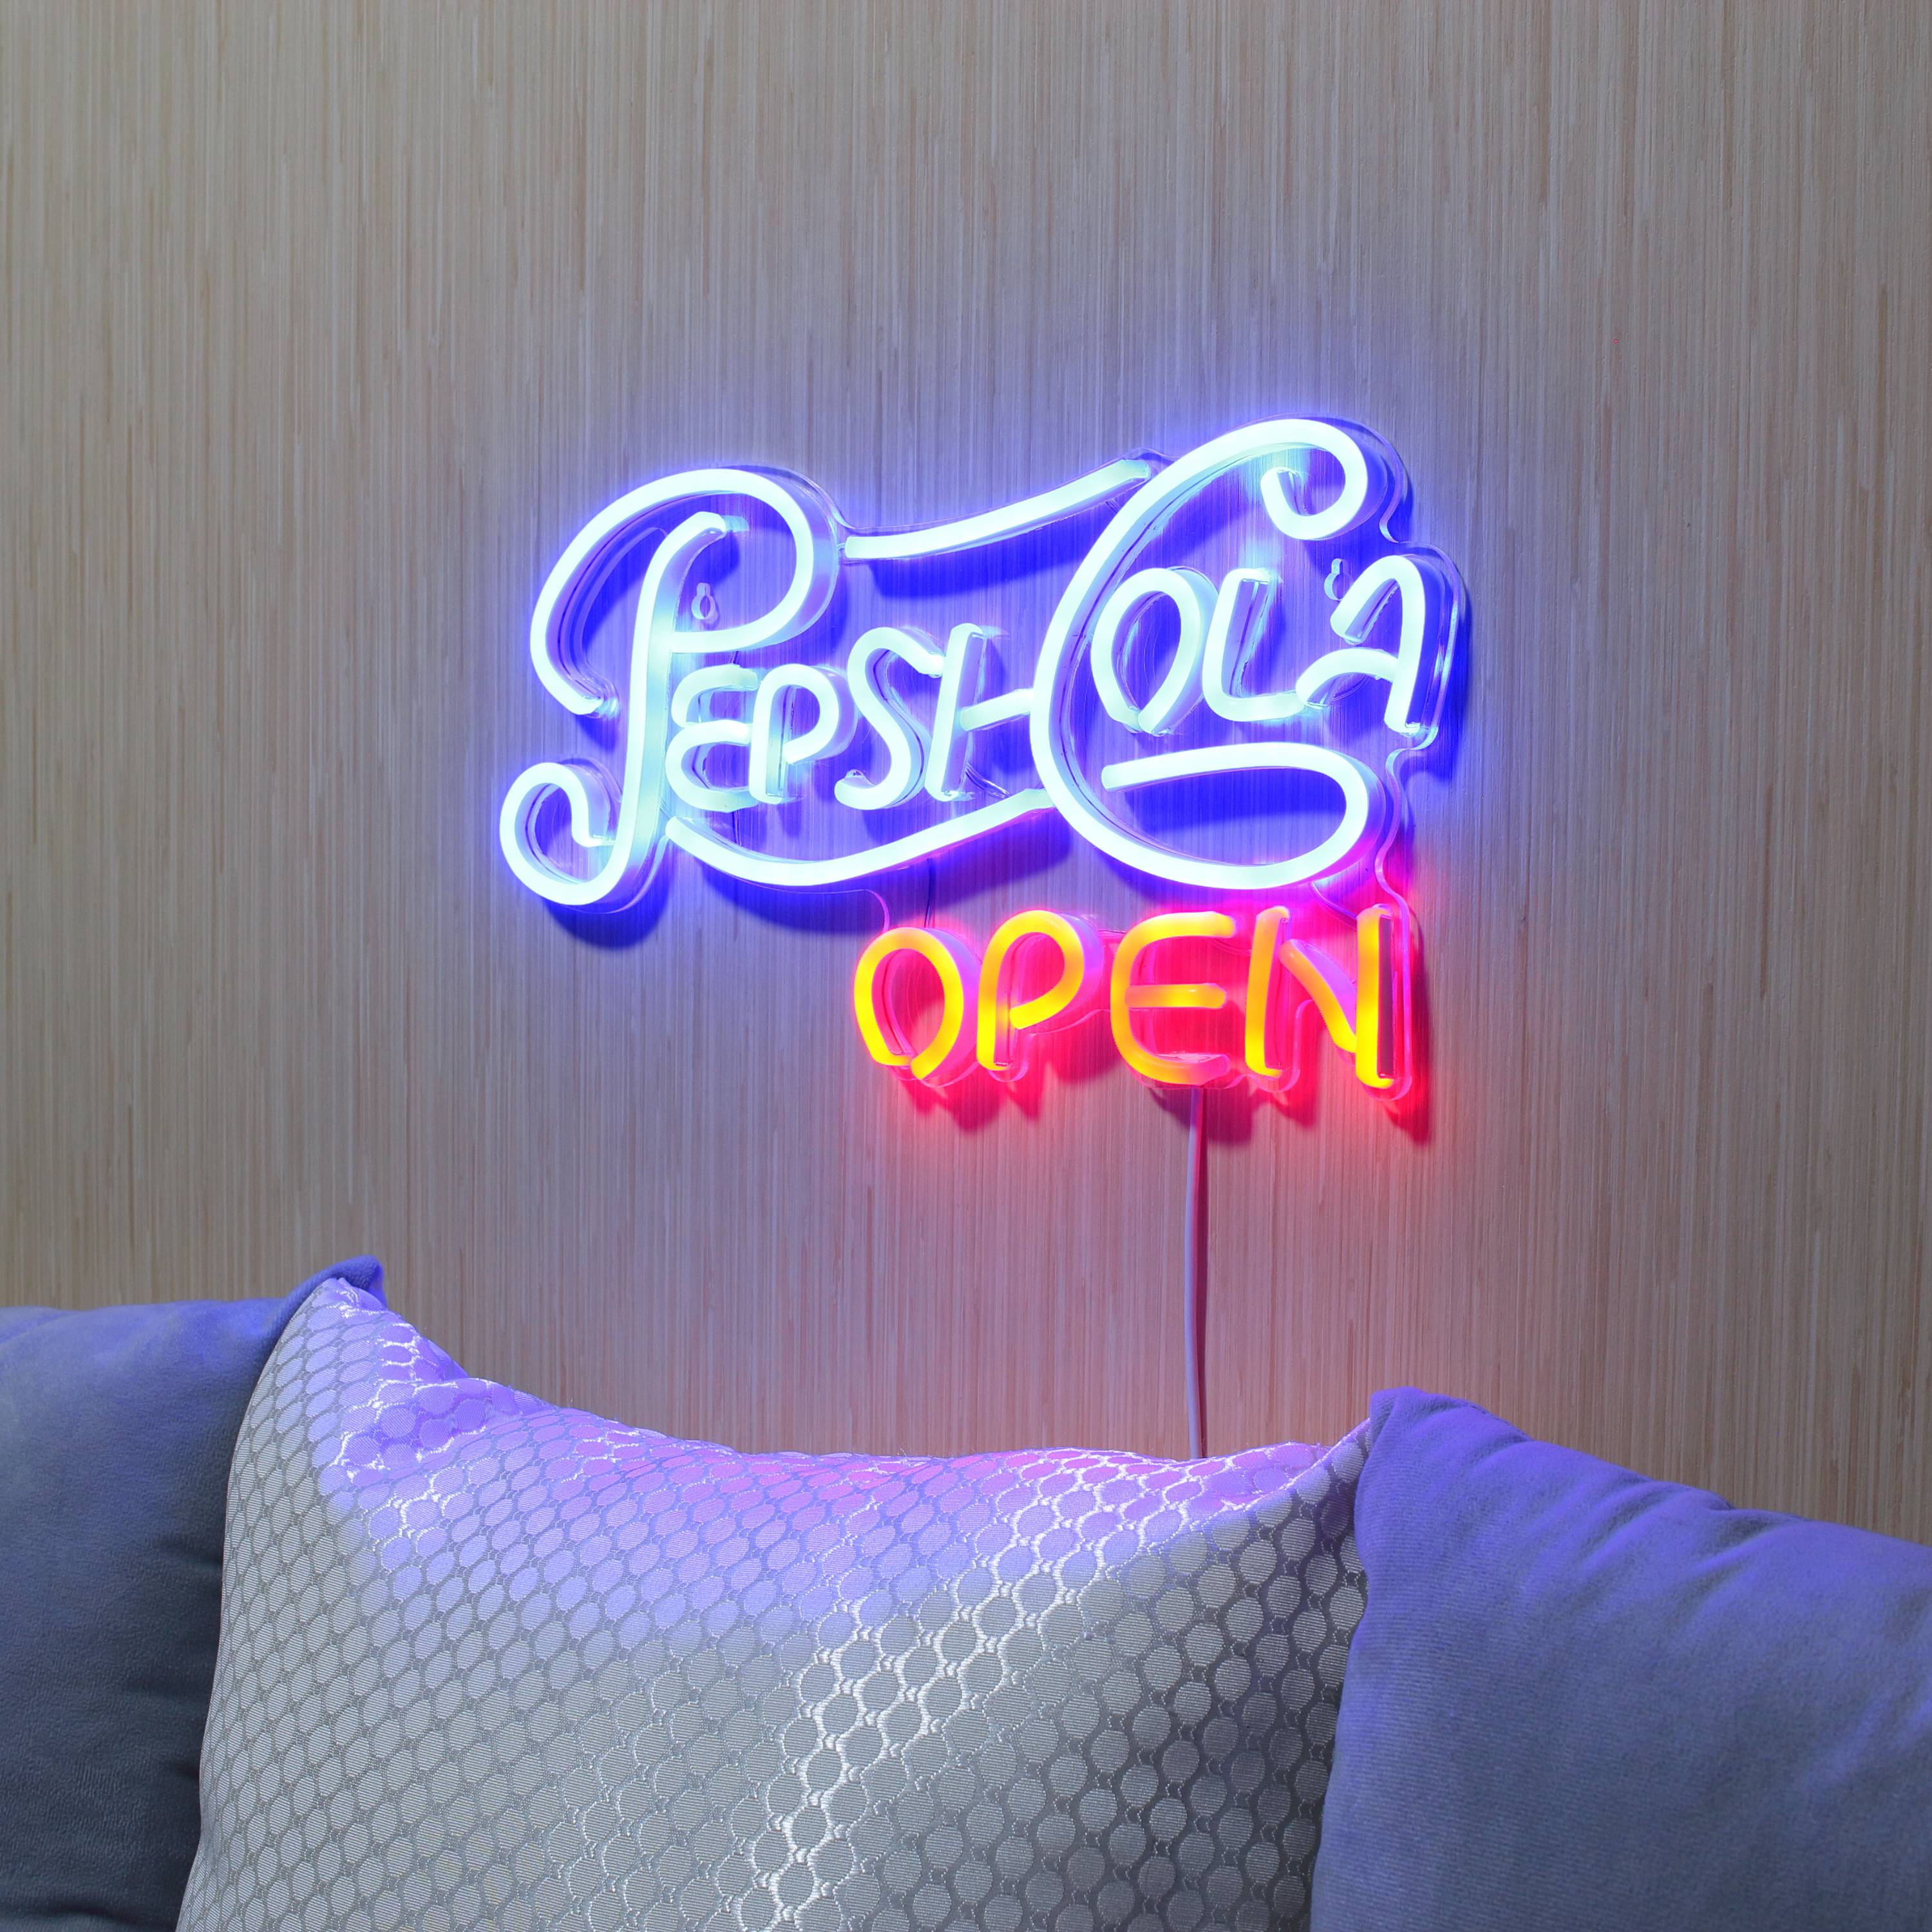 Pepsi Cola Open Sign Large Flex Neon LED Sign